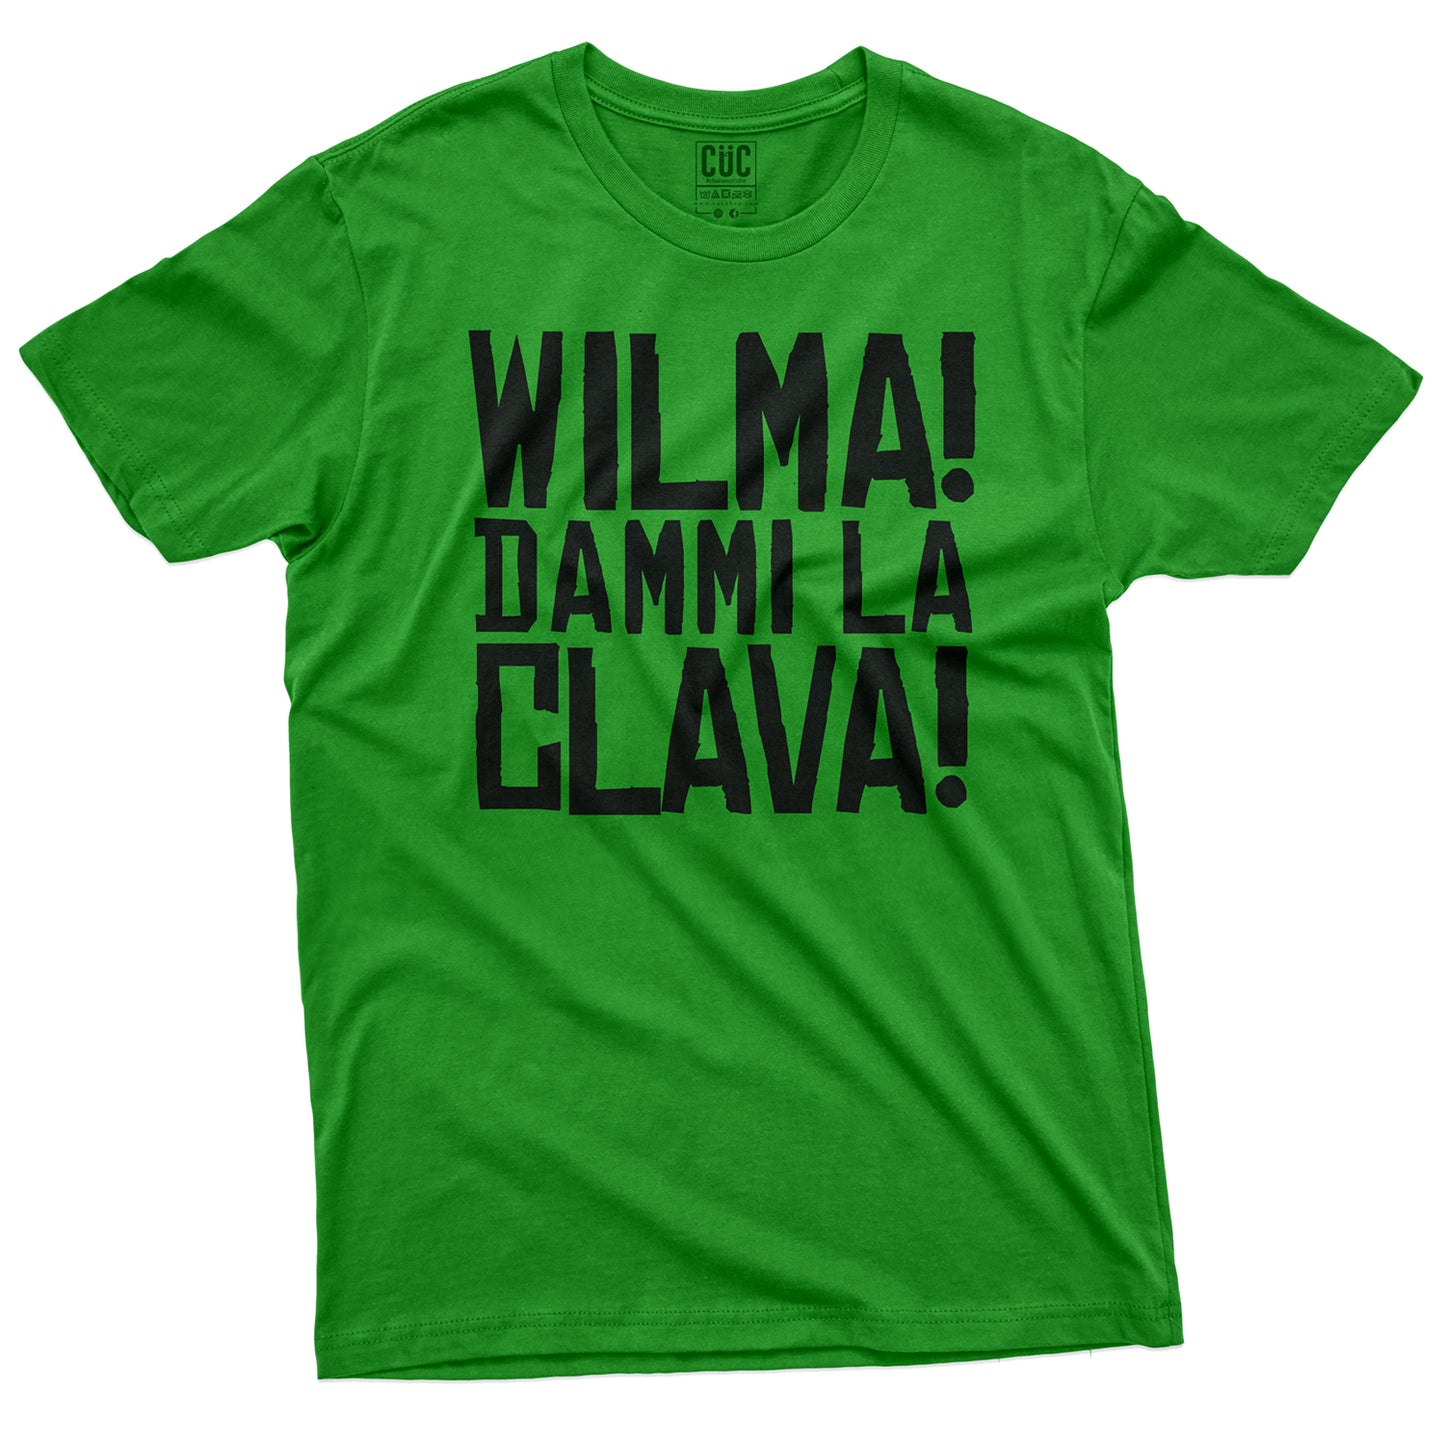 CUC T-Shirt FLINTSTONES - Wilma! dammi la Clava! -  Gli Antenati  #chooseurcolor